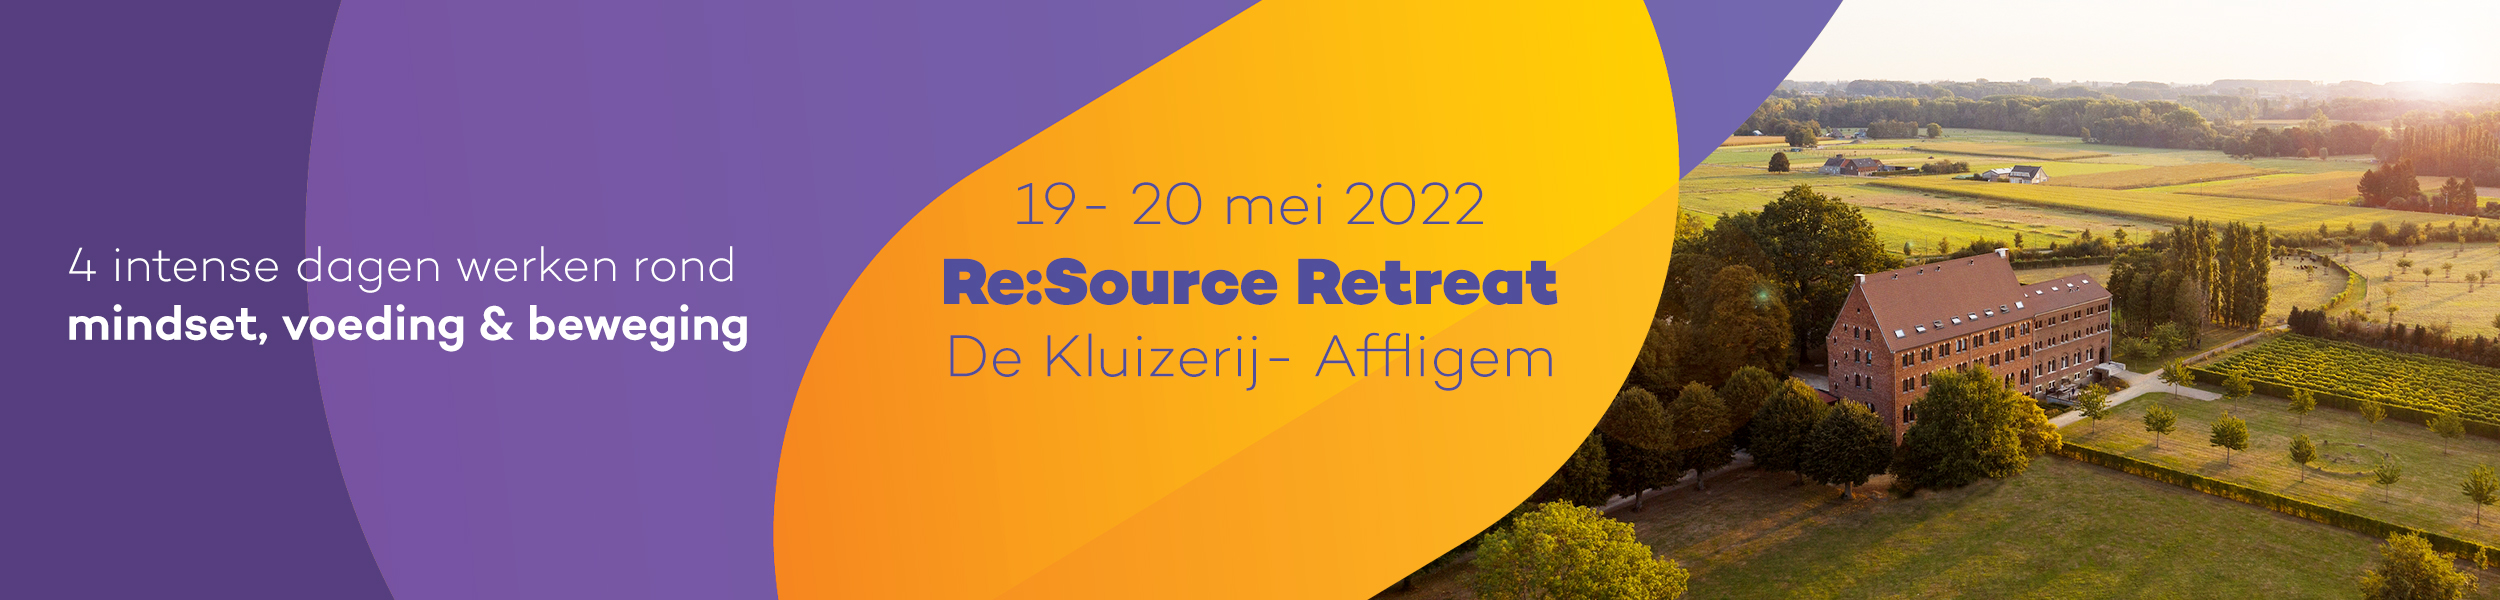 Re-Source Retreat banner 2022